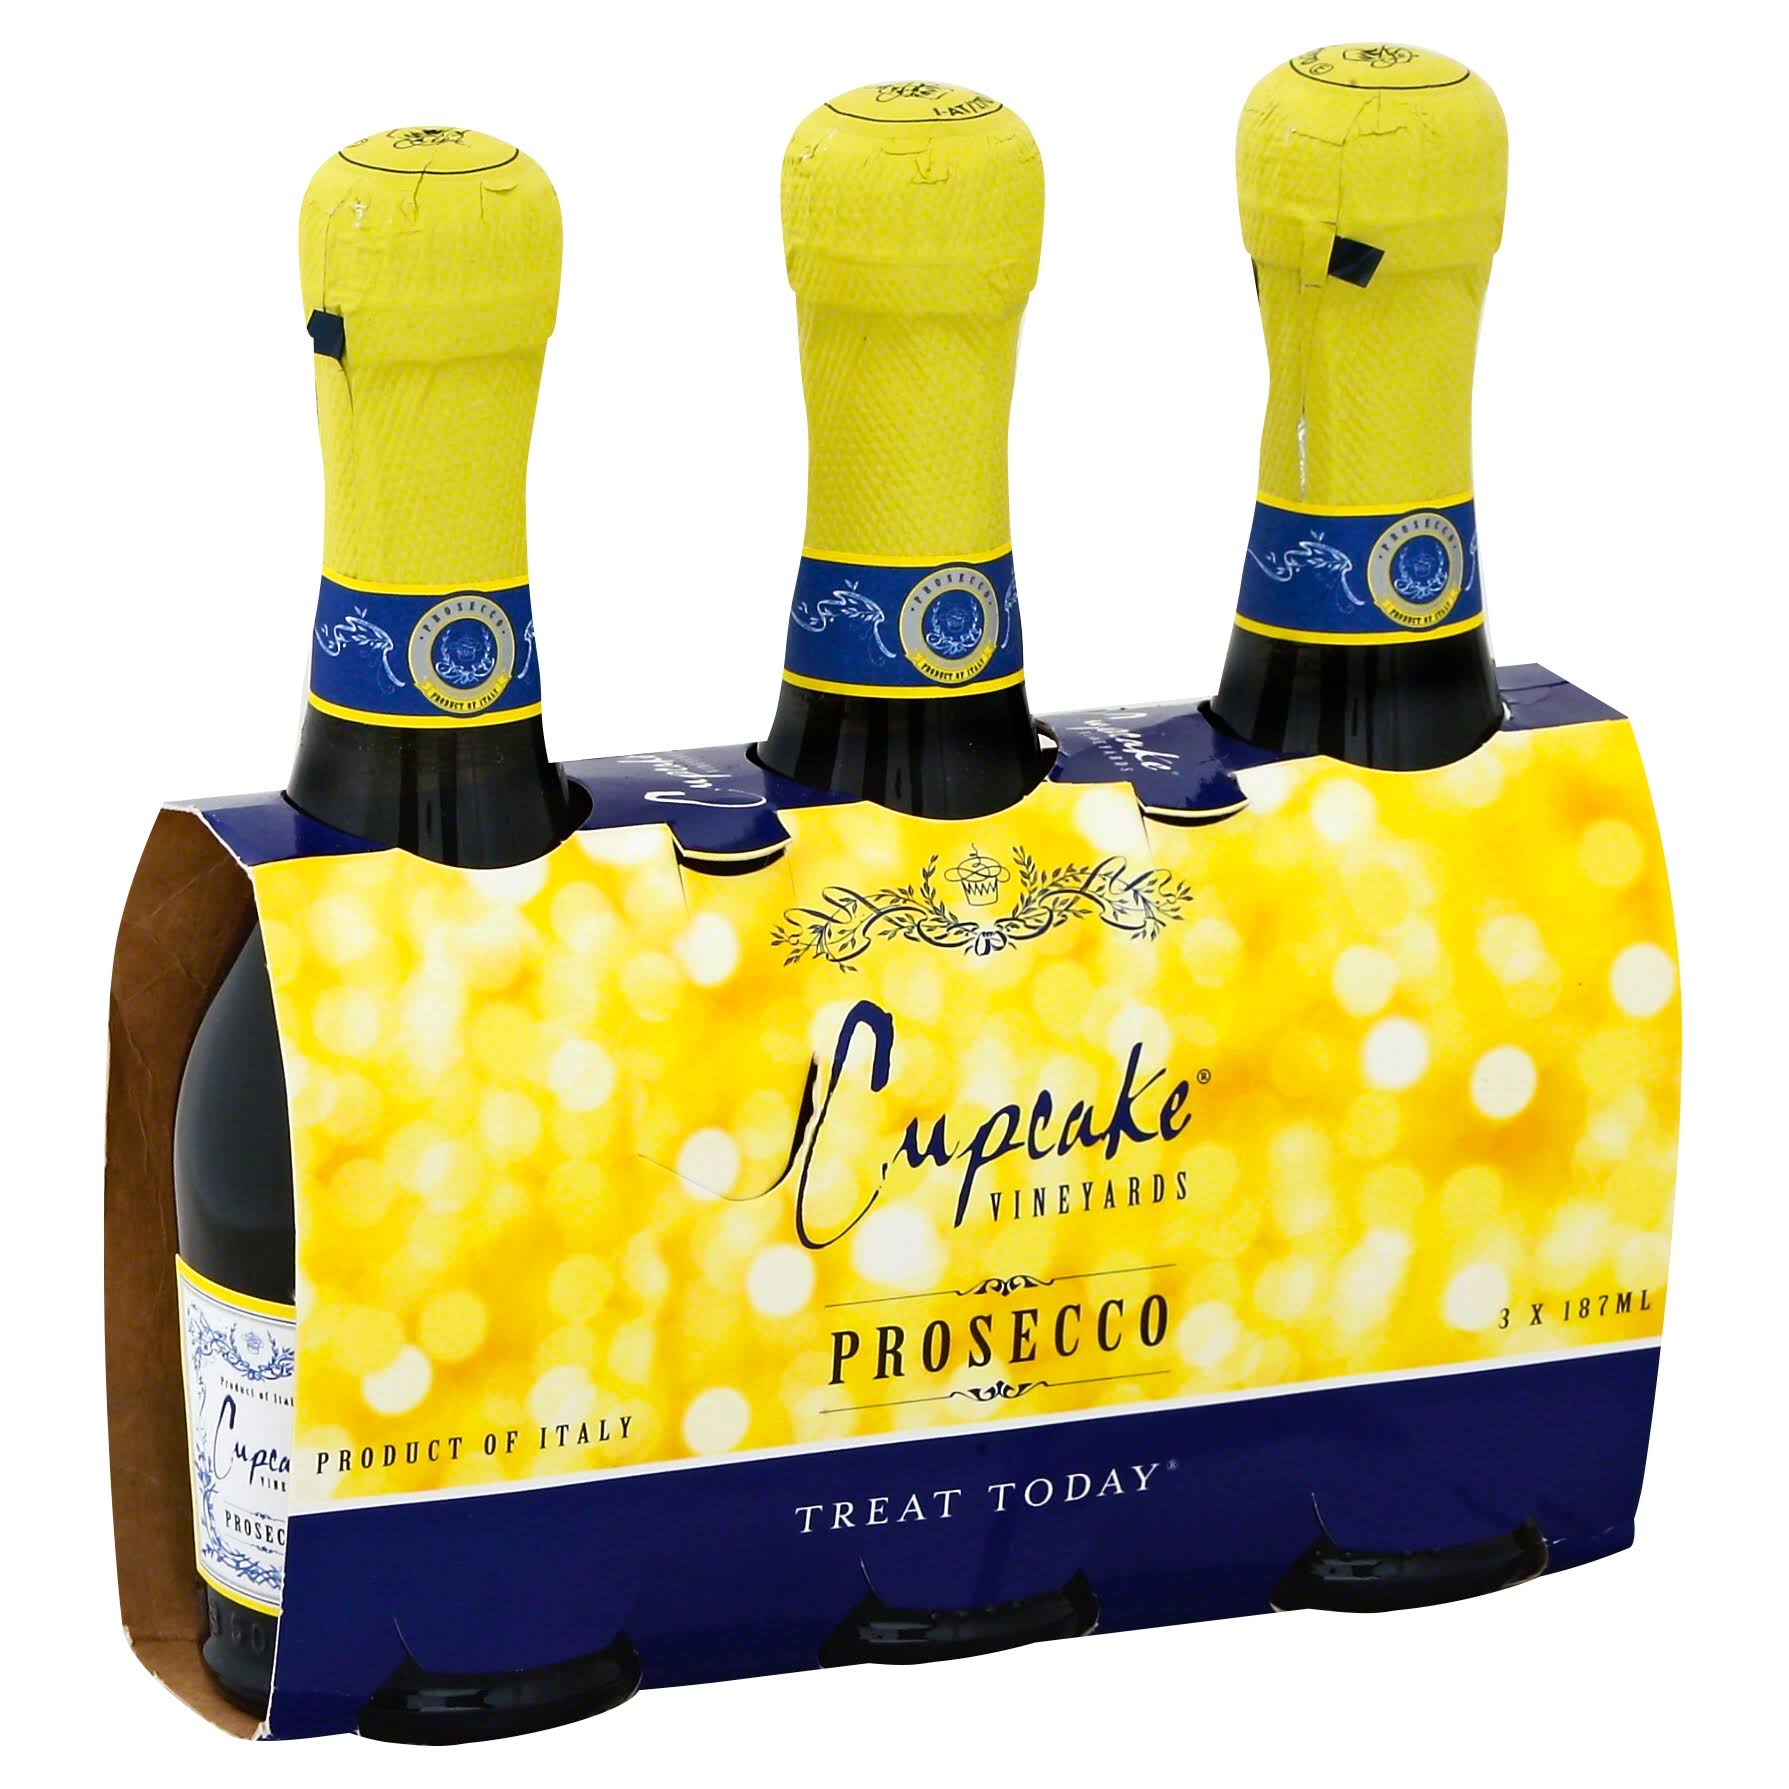 Cupcake Prosecco - 3 pack, 187 ml bottles